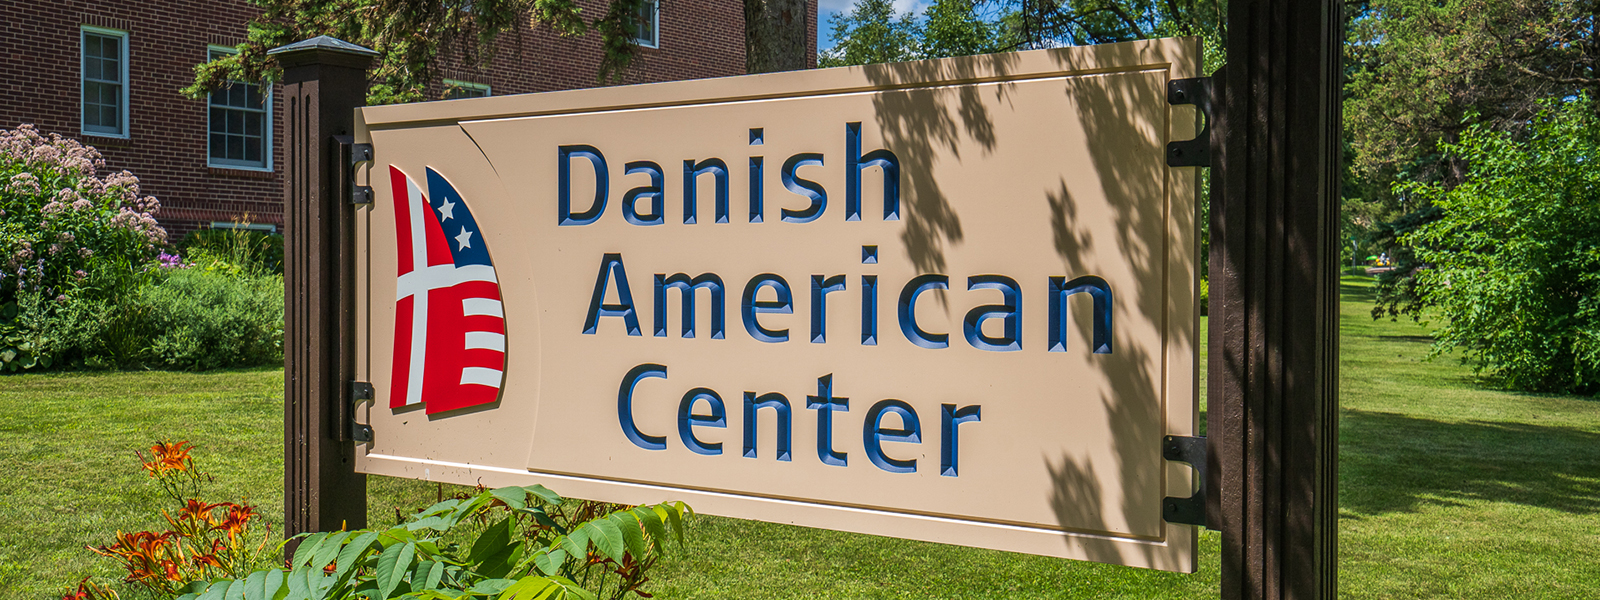 danish-american-center-sign.jpg